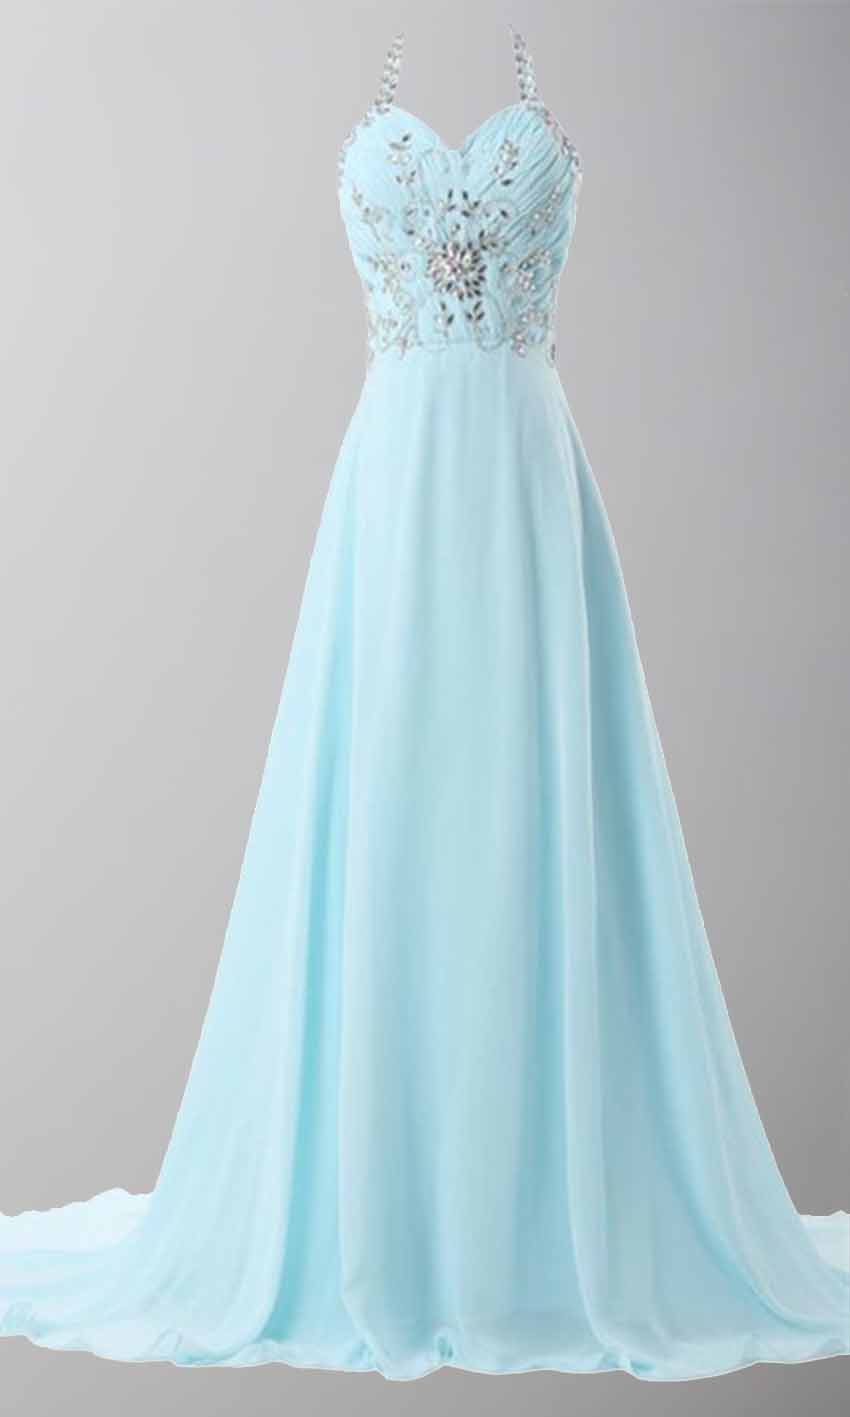 Sky Blue Crystal Halter Long Prom Dresses Tie Up Back P447